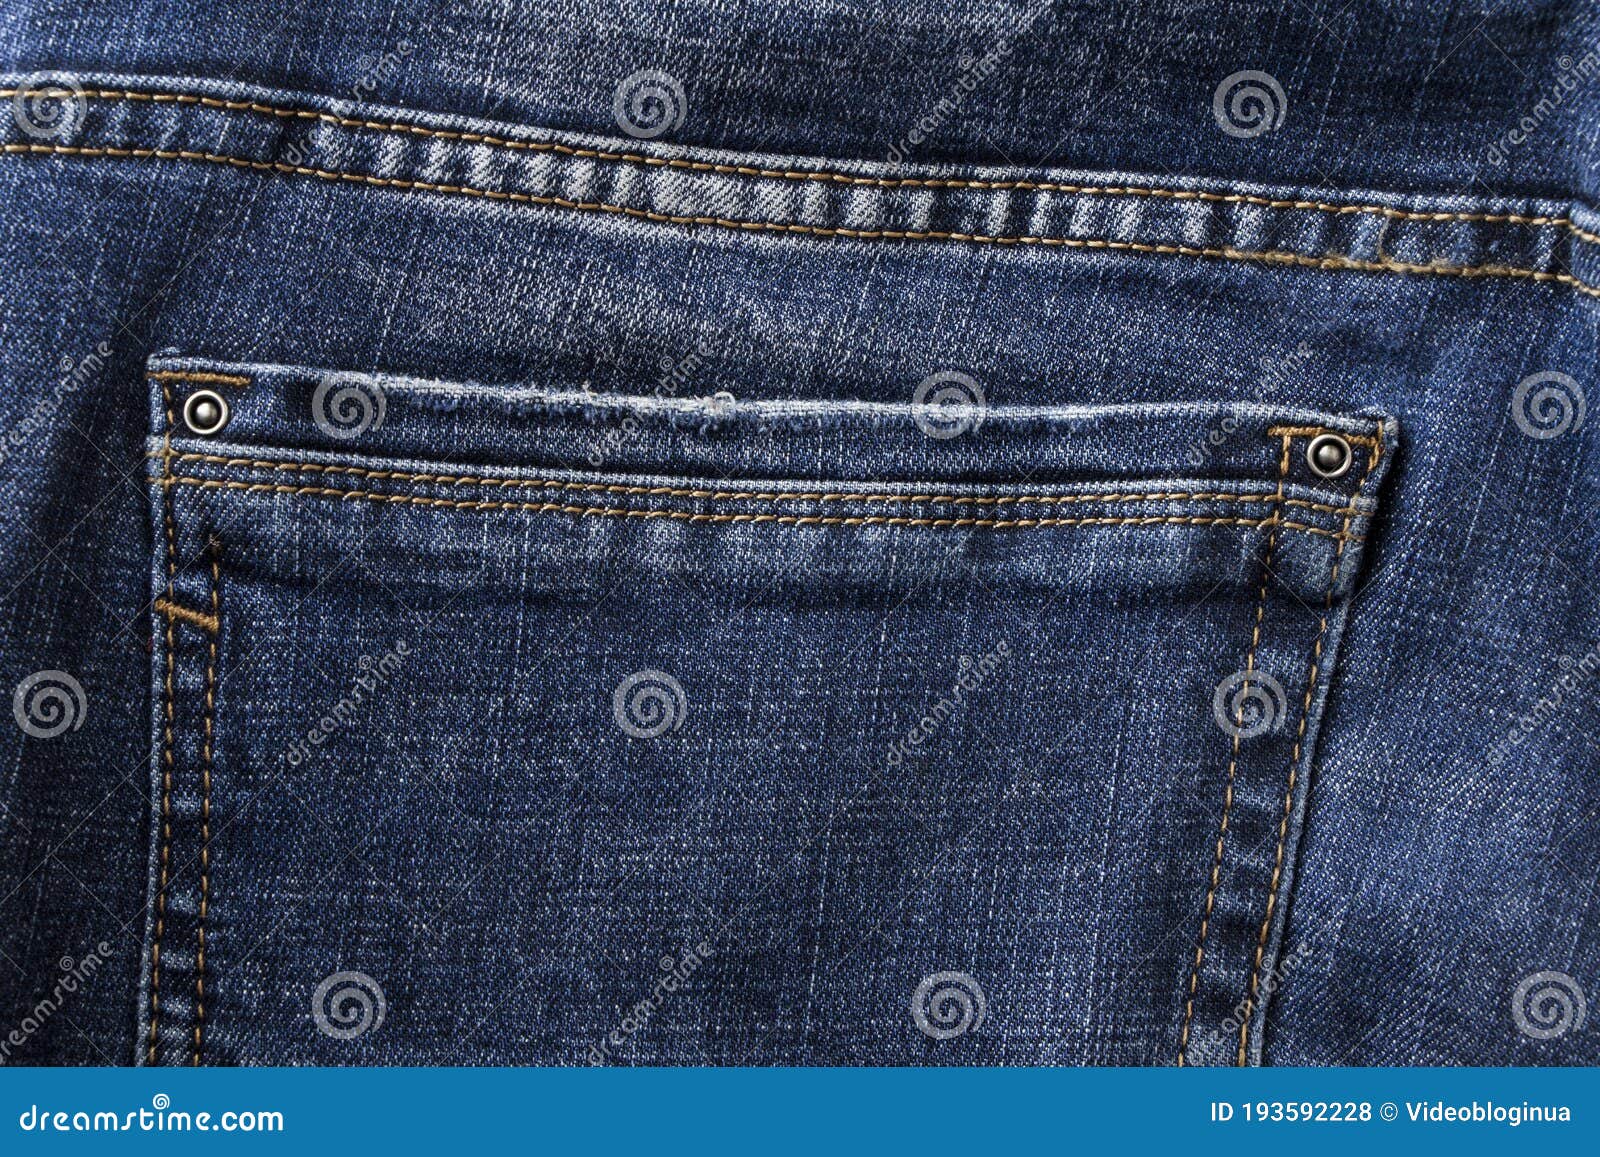 Jeans Pocket Stock Image Of Denin, Fashion, Blue 748090